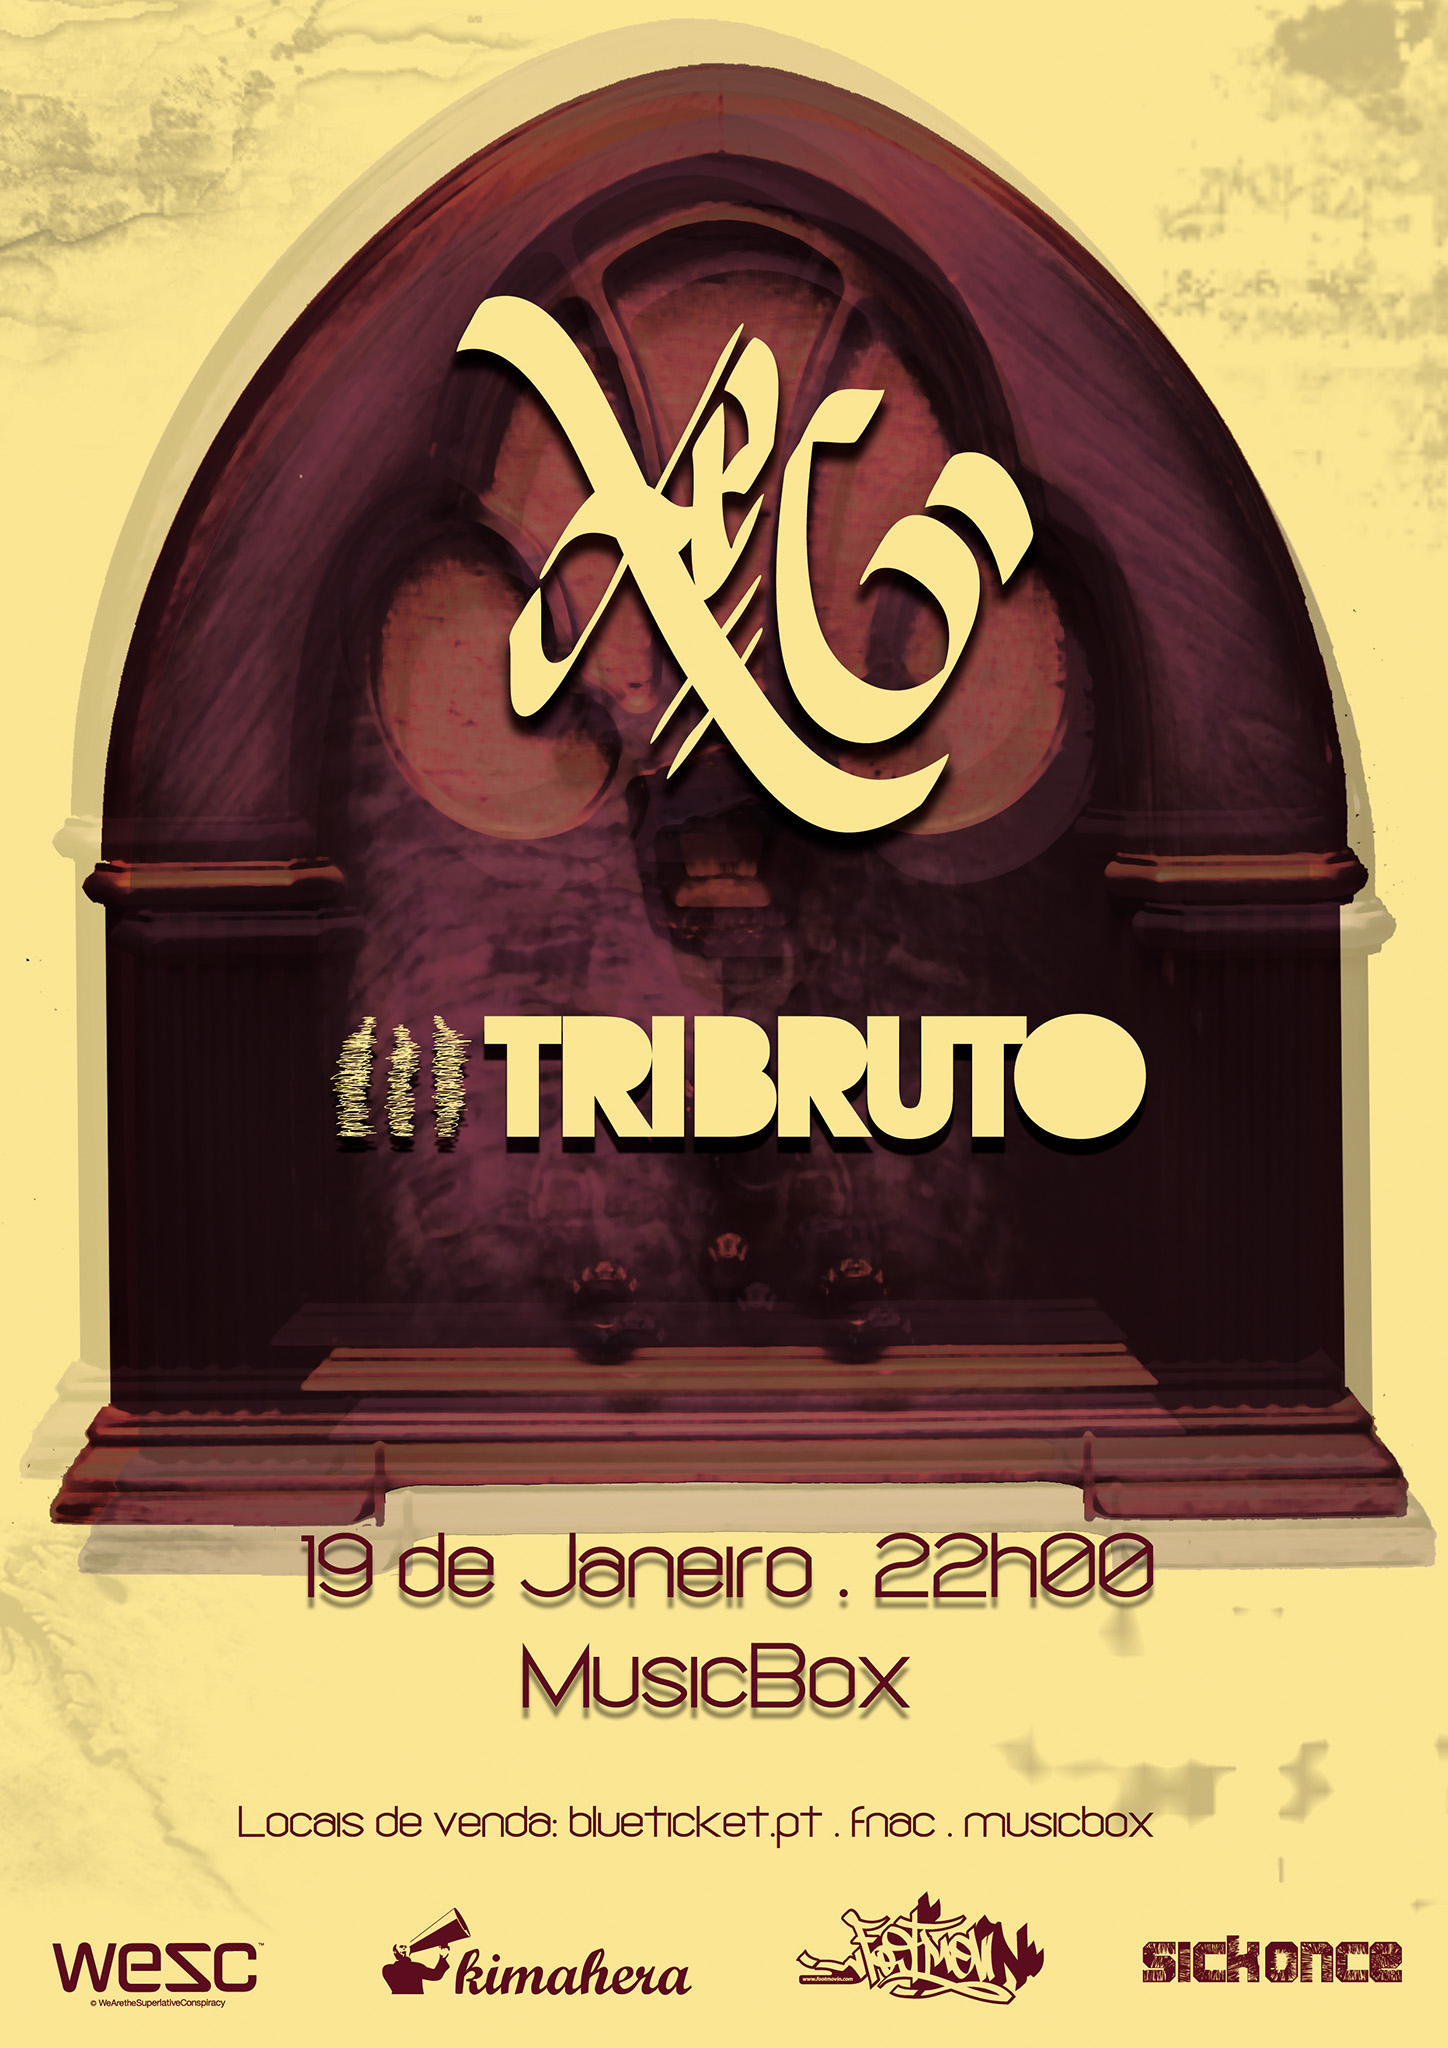 Tribruto + Xeg @ MusicBox Lisboa